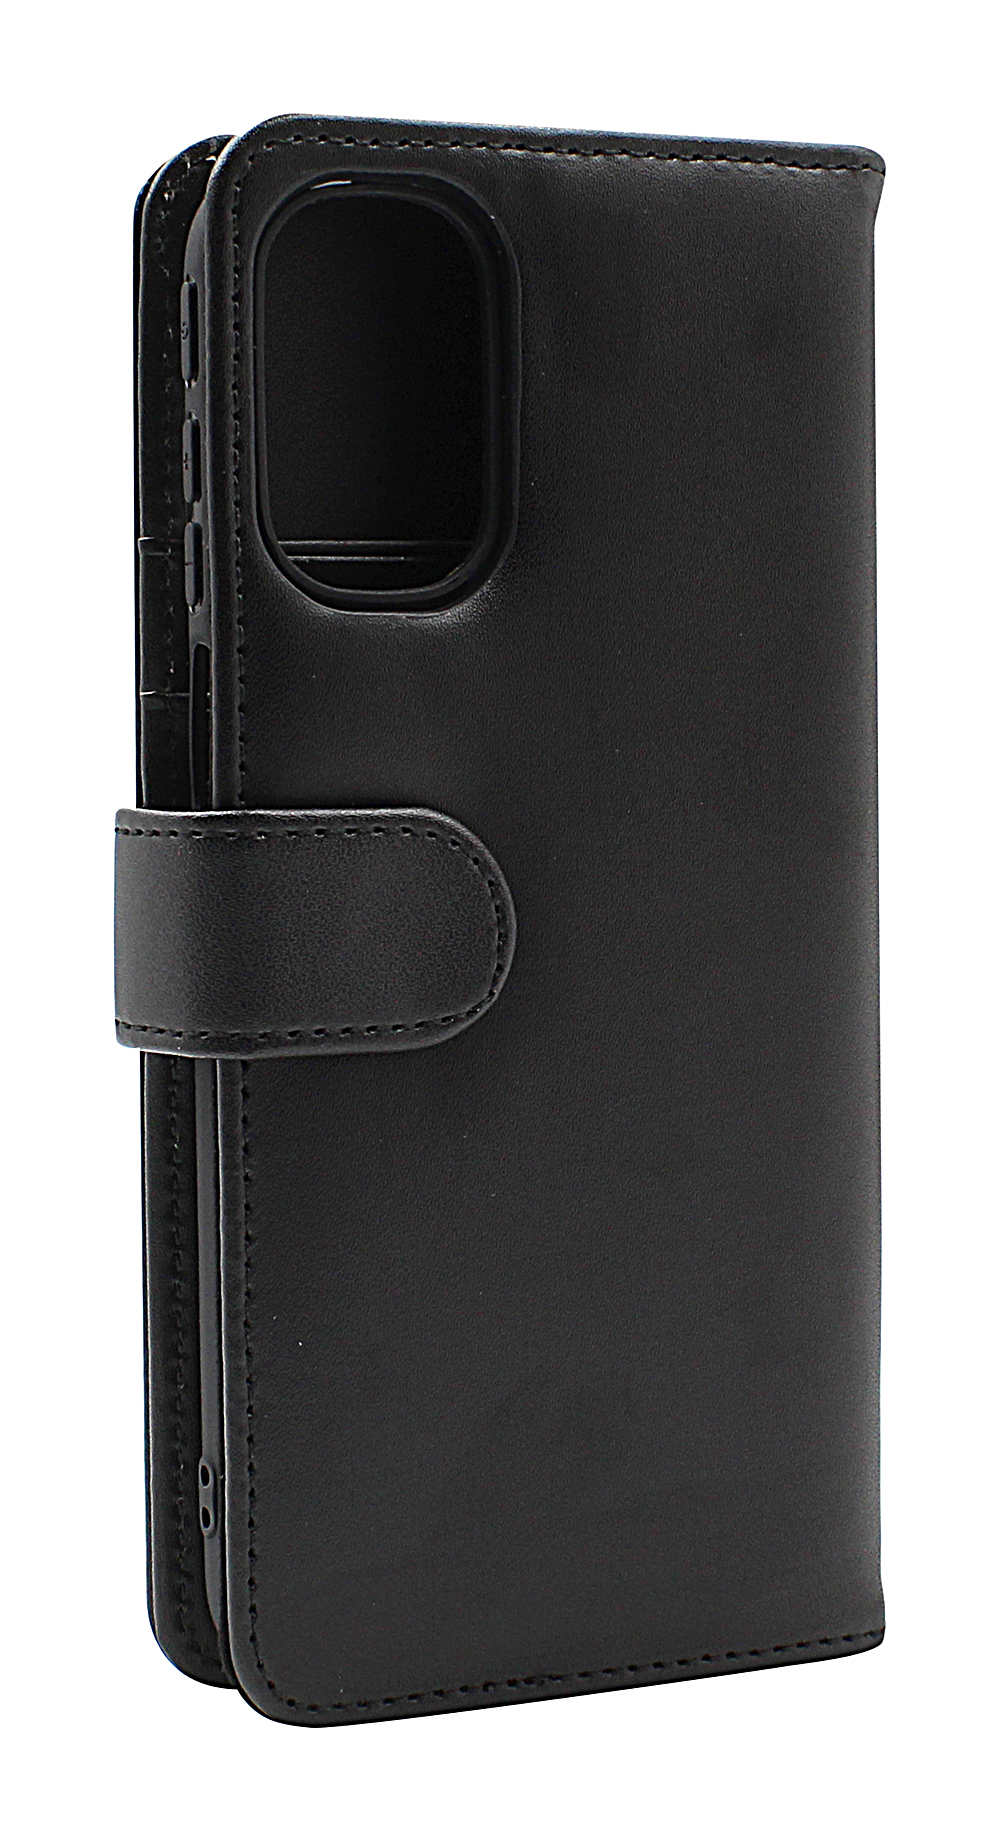 Skimblocker Mobiltaske Motorola Moto G31/G41